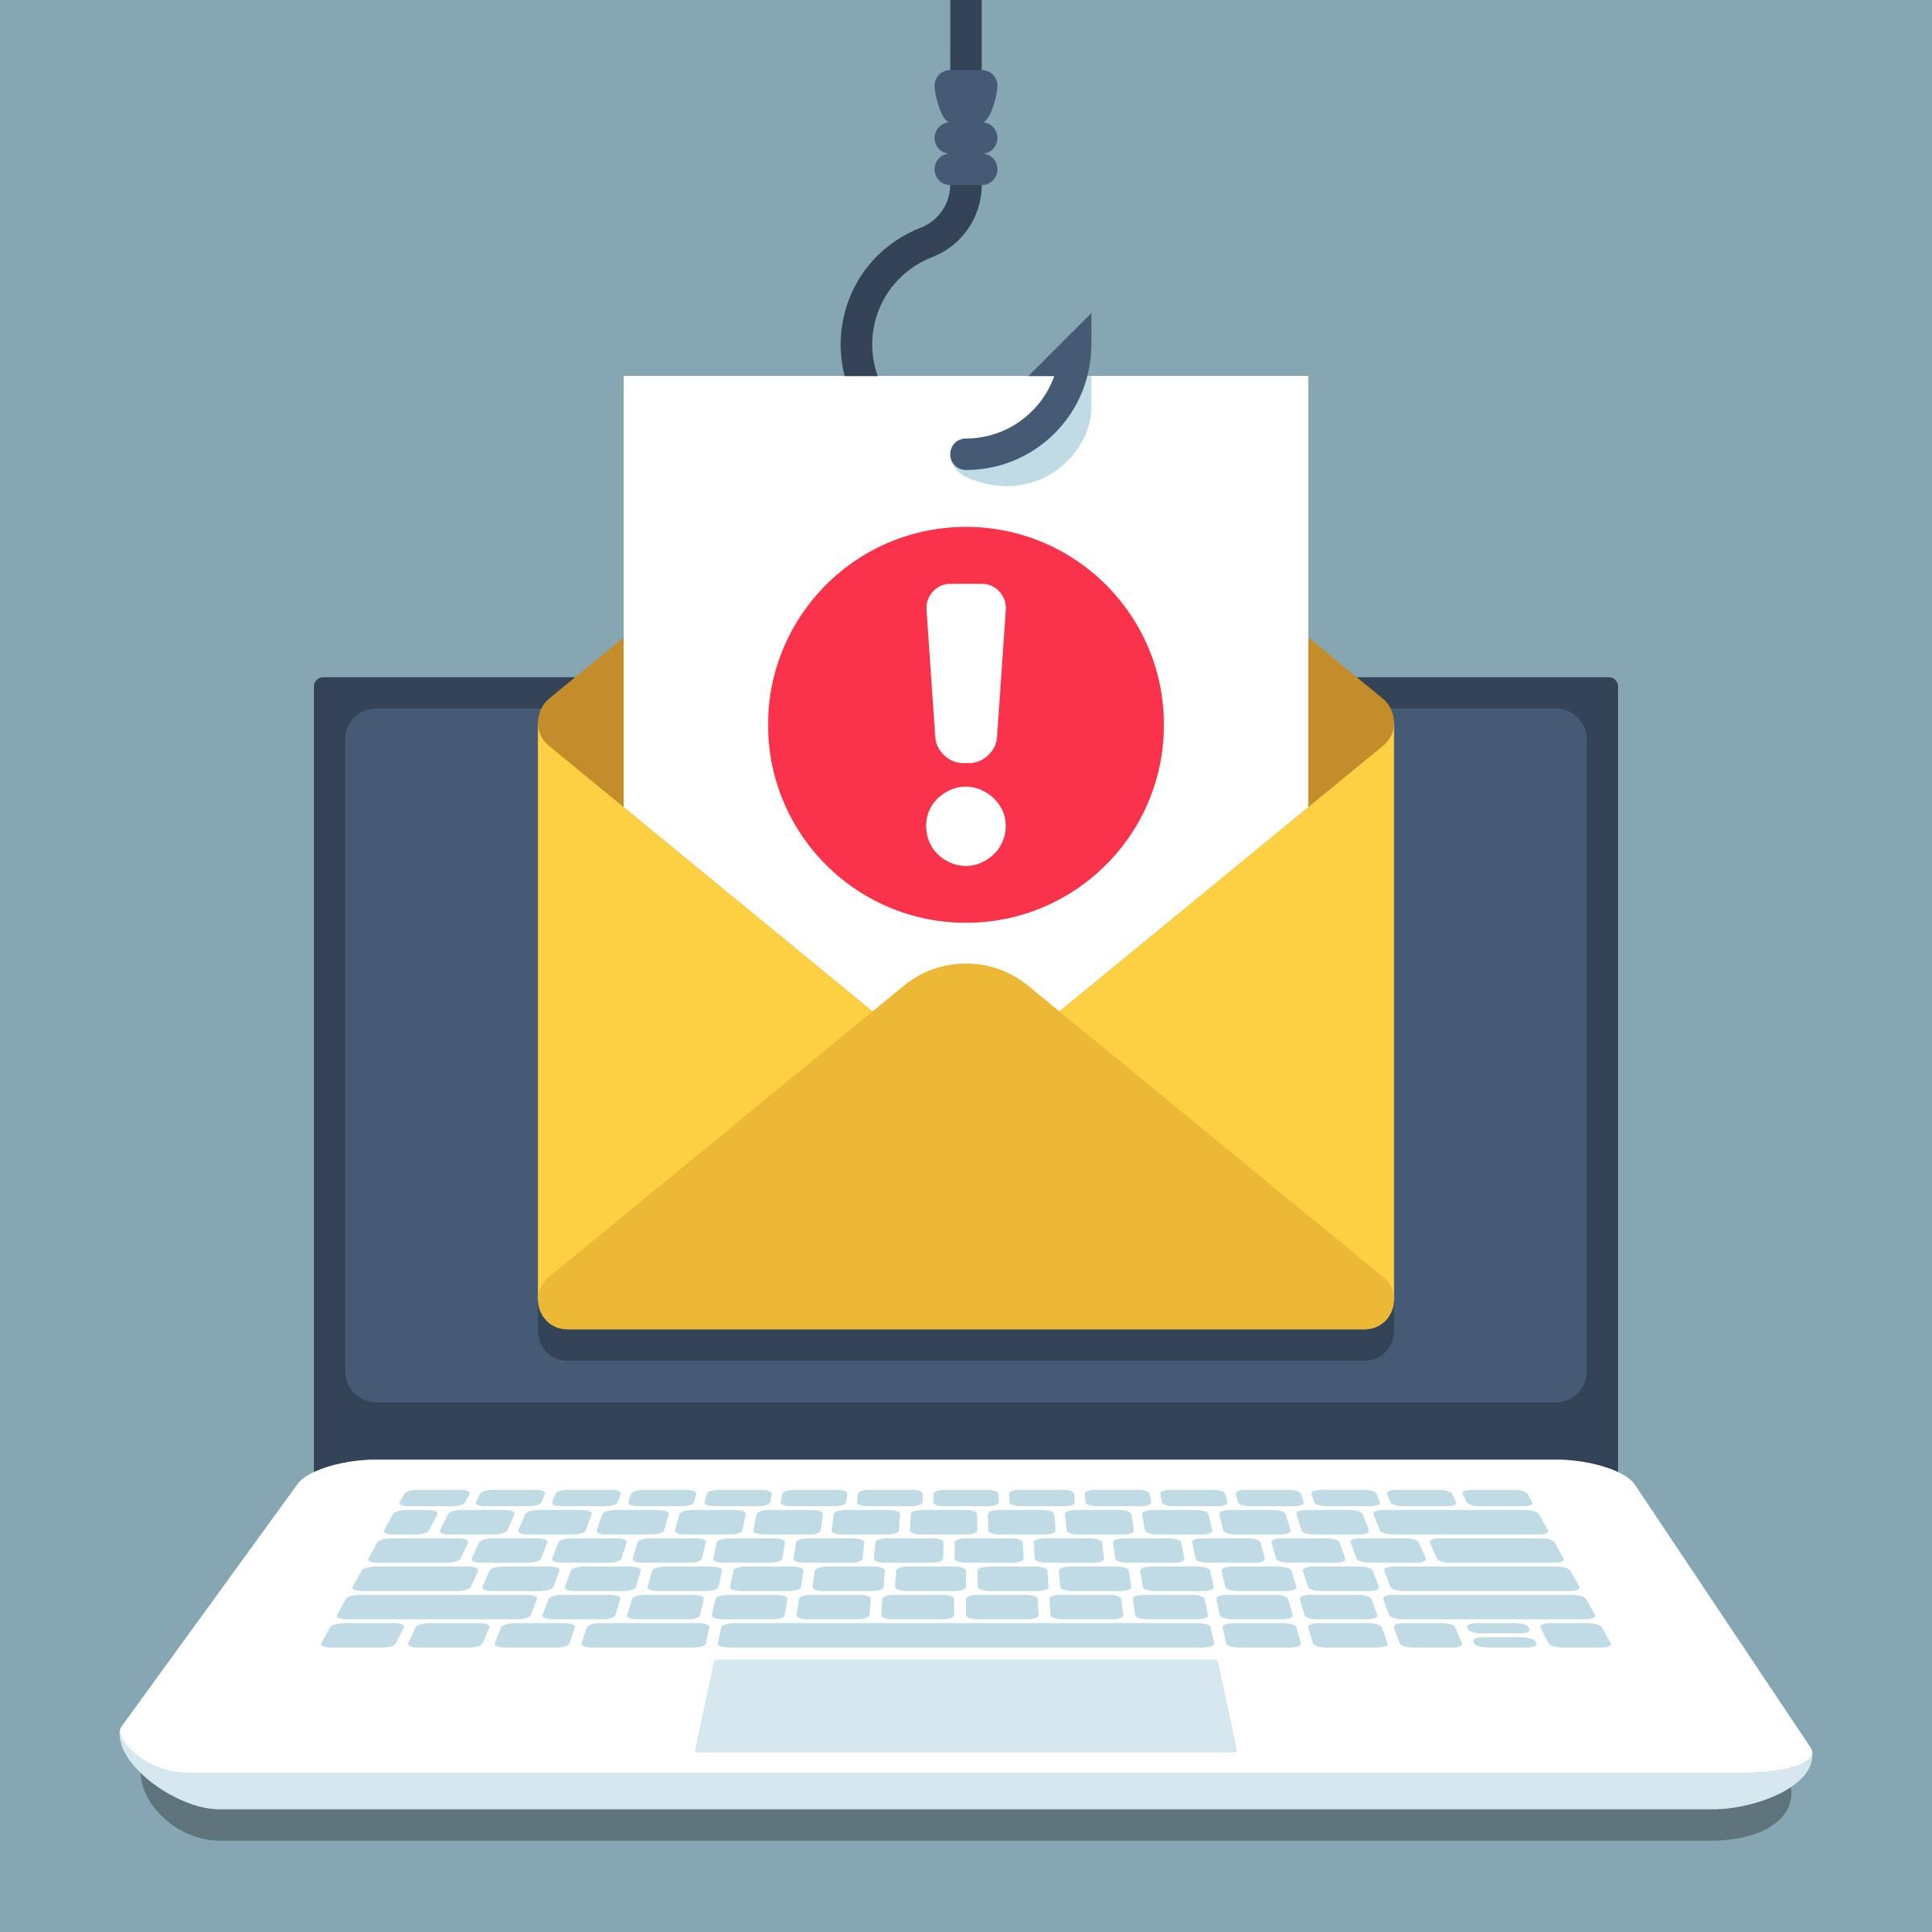 Protect Yourself Online: Phishing URLs - IT News - Information